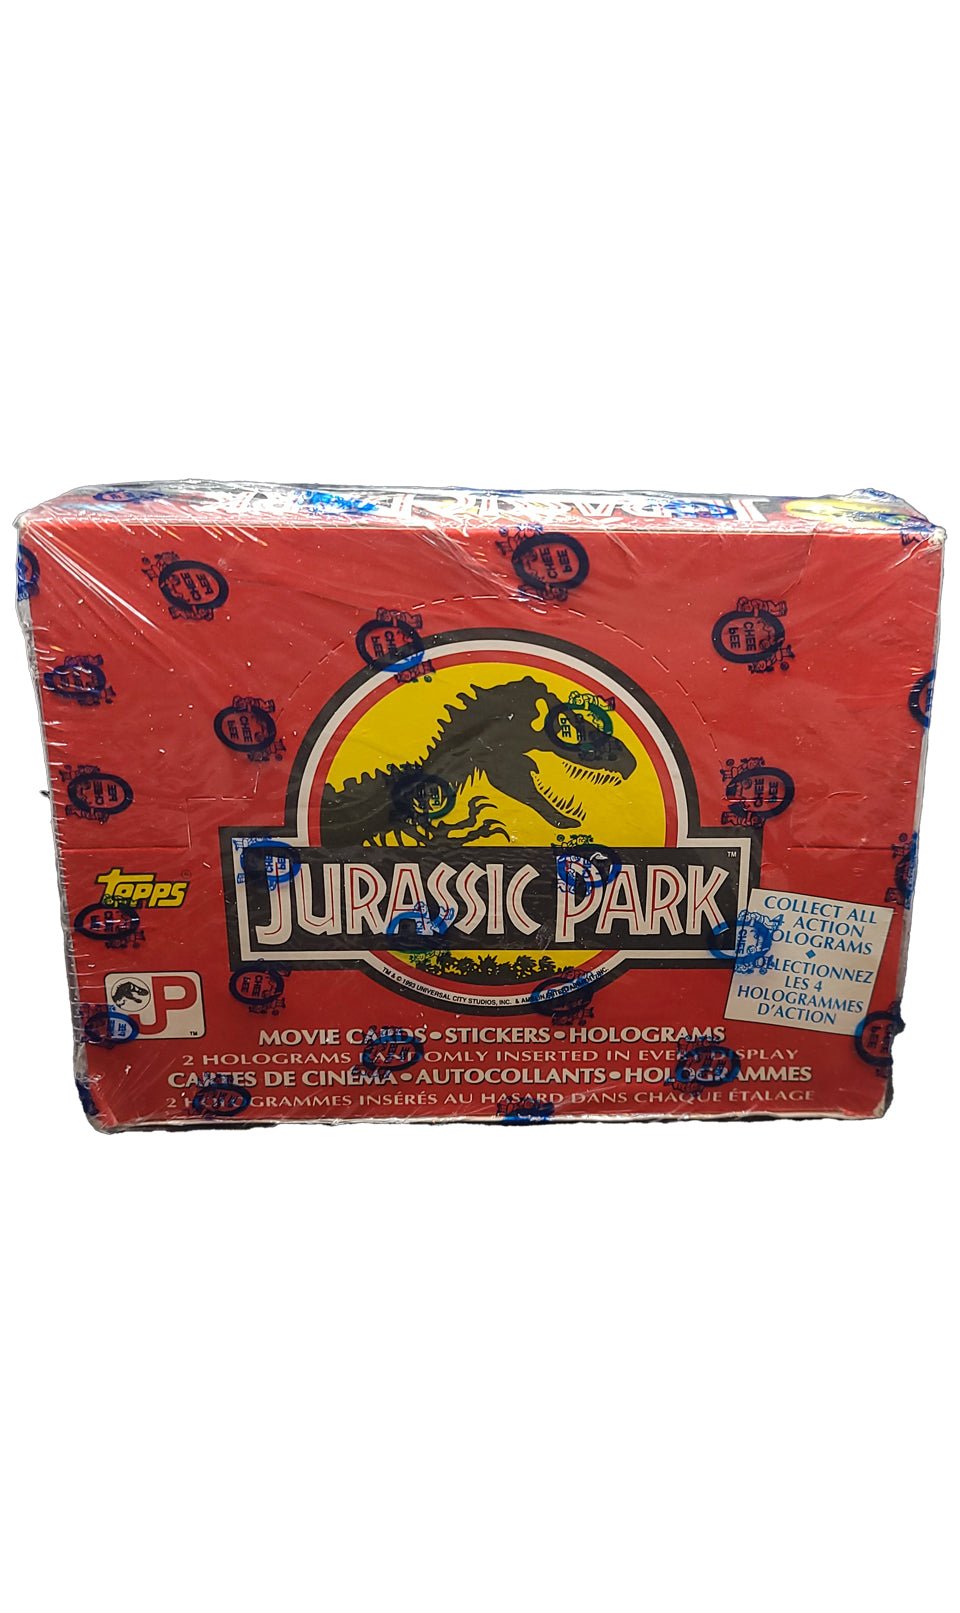 1993 Topps O-Pee-Chee Jurassic Park Movie Cards & Stickers Factory Sealed Box Jurassic Park Sealed Box - Hobby Gems